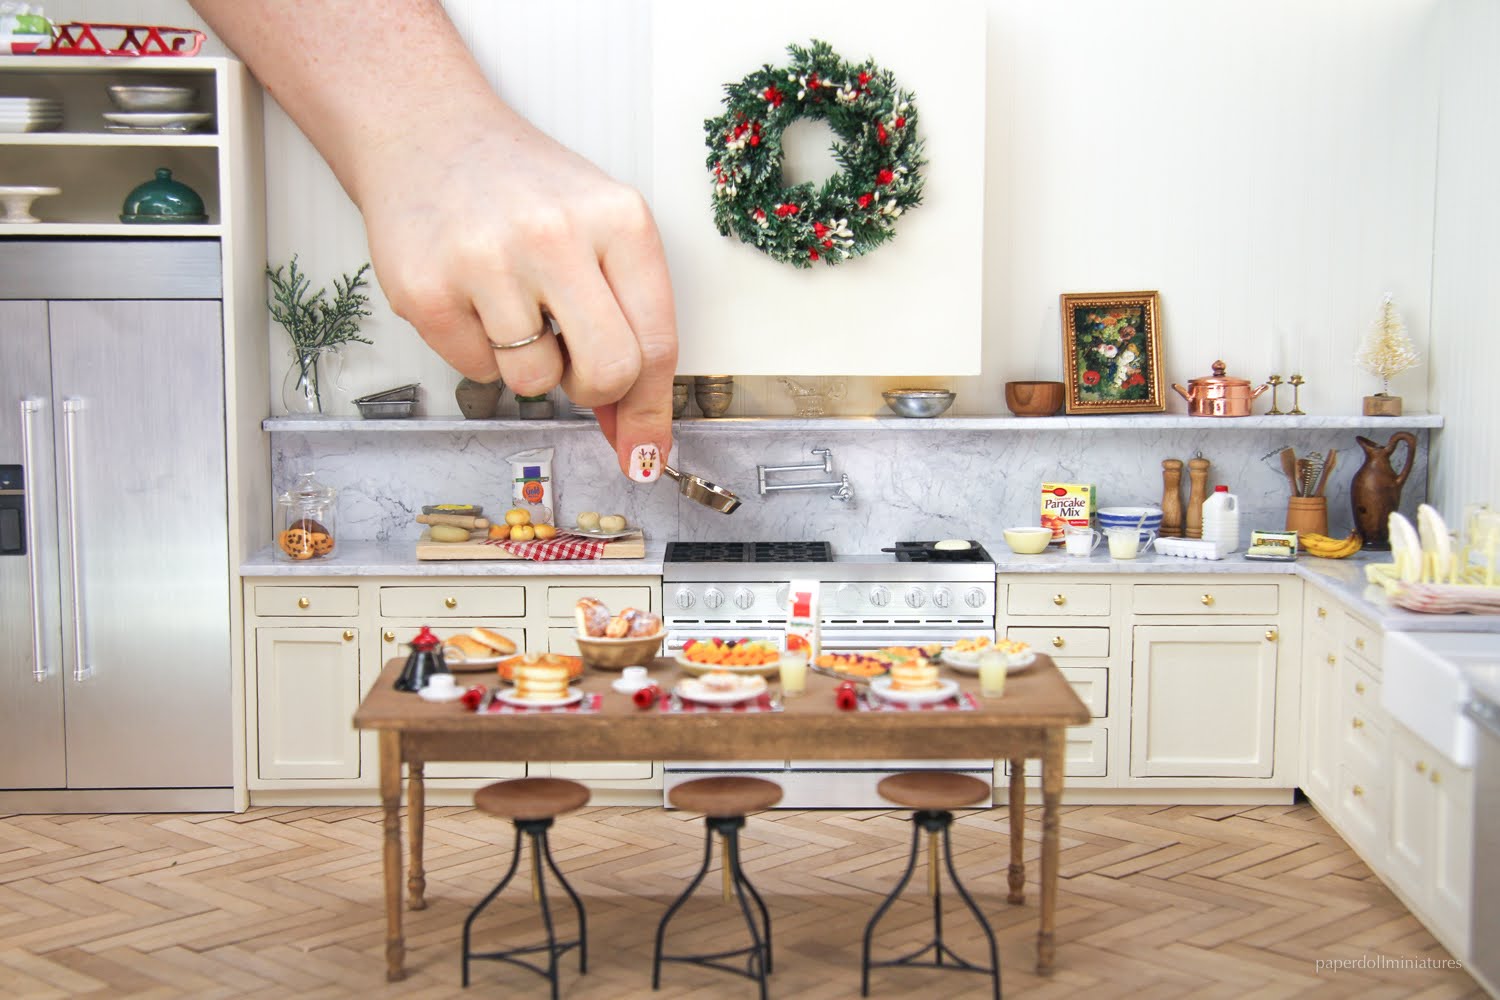 DIY Dollhouse Christmas Decorations Cupboard - Miniatures